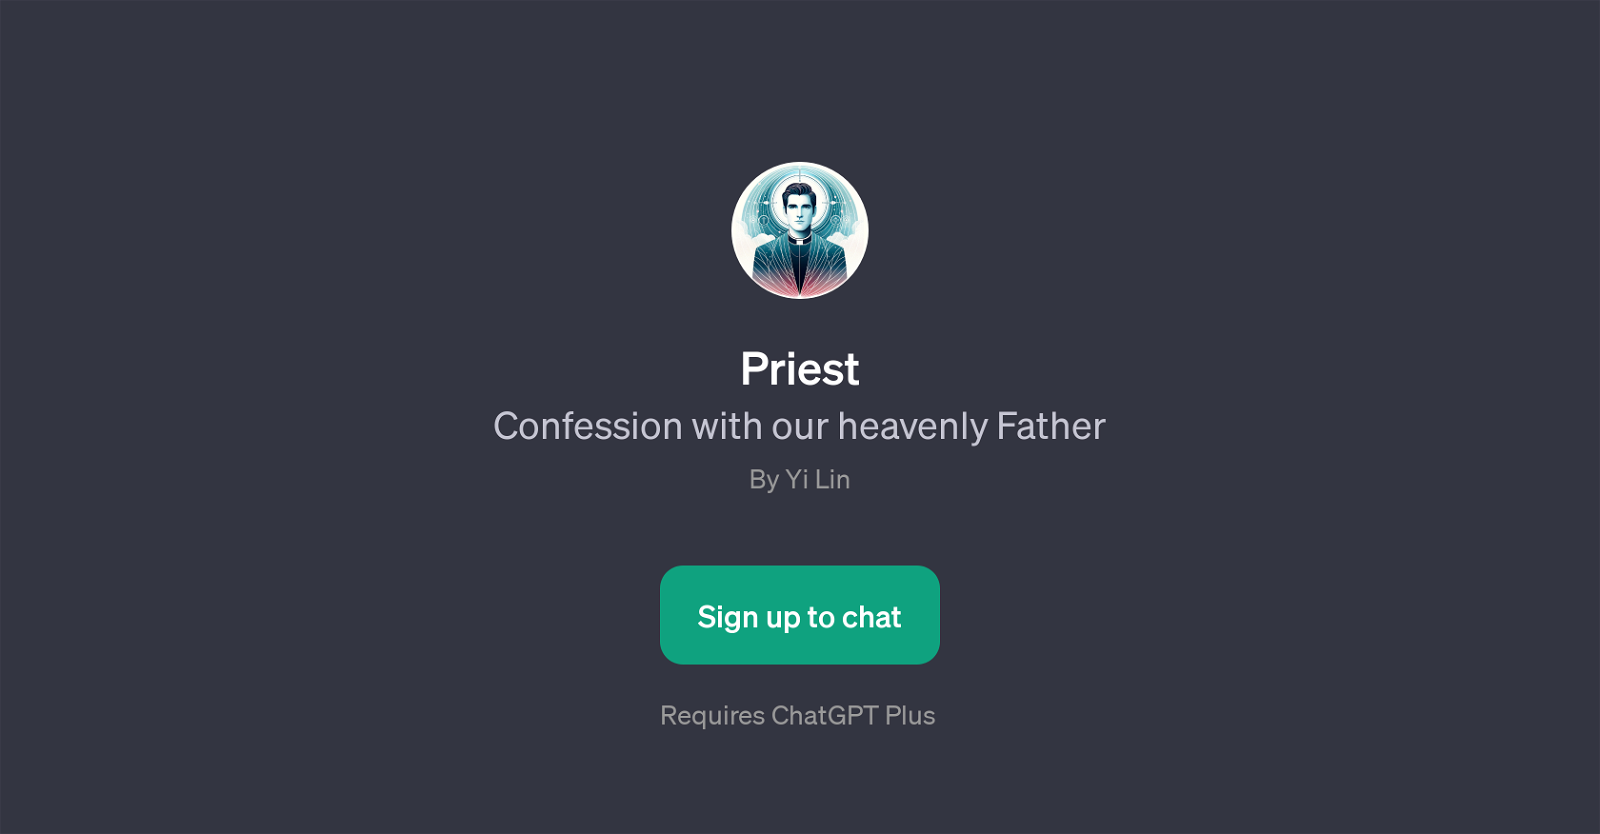 Priest website